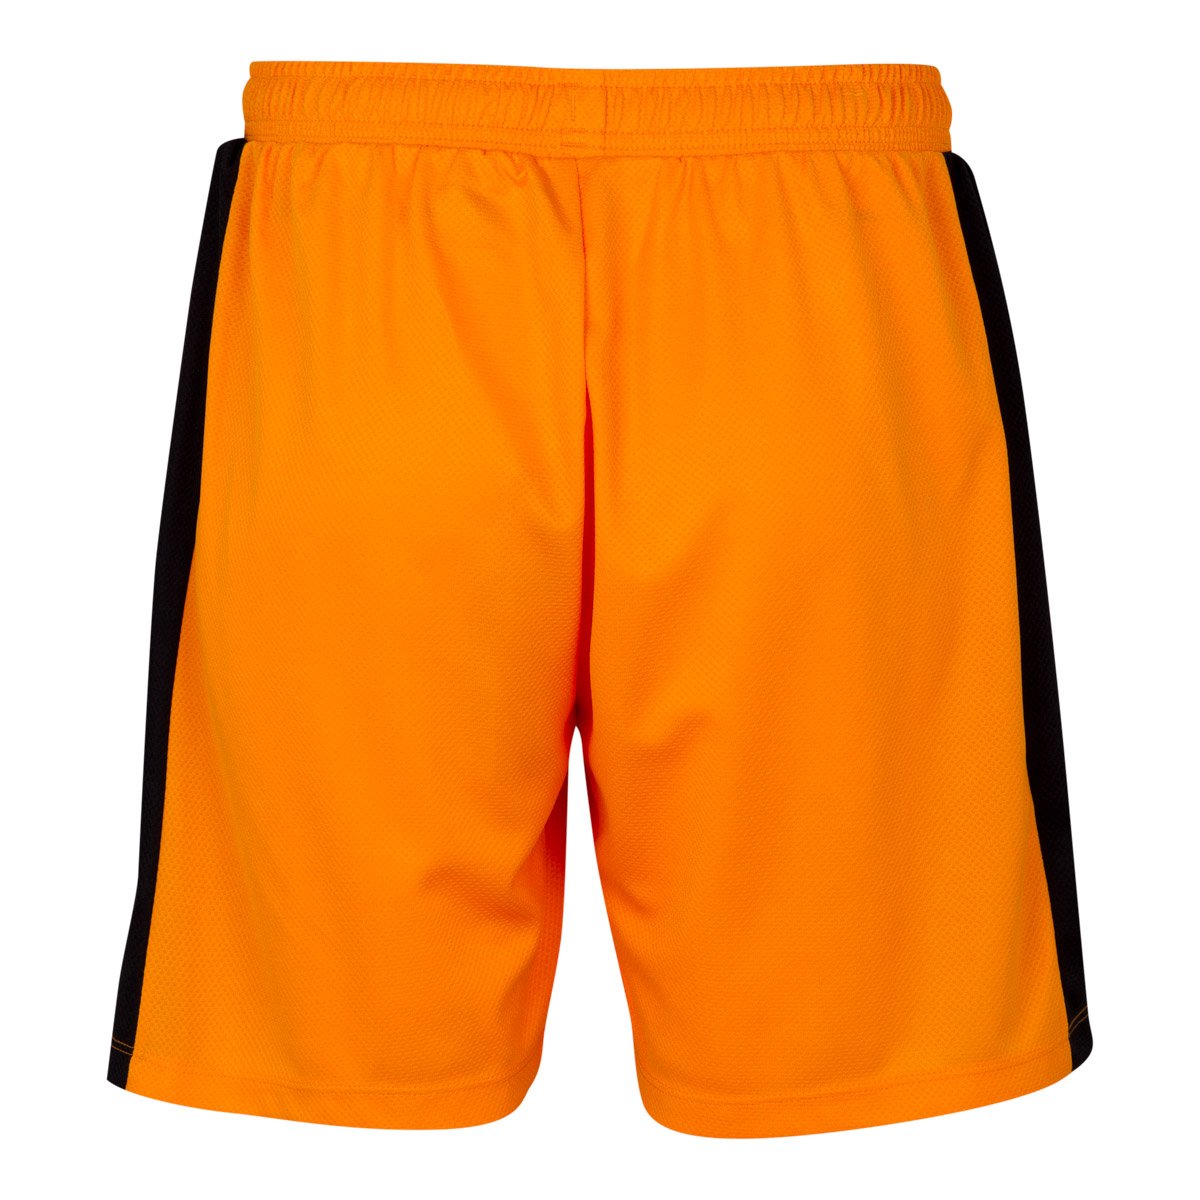 Pantalones cortes Basket Calusa Naranja Mujer - Imagen 2